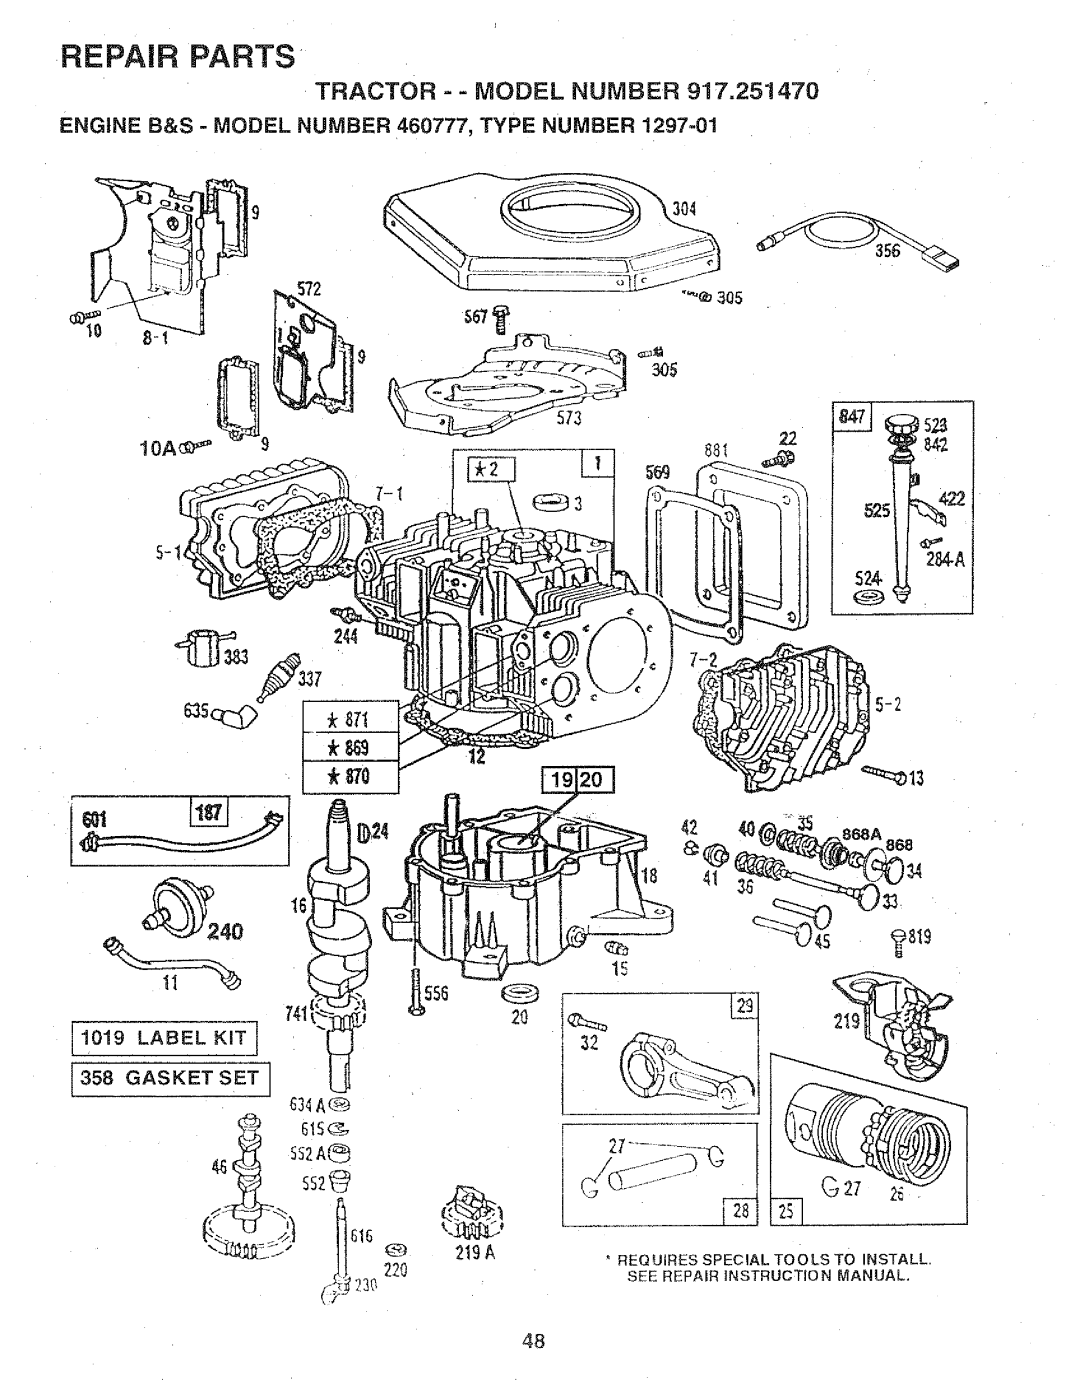 Sears 917.25147 owner manual ENGINE B&S - MODEL NUMBER 460777, TYPE NUMBER, Repair Parts, Tractor - - Model Number 